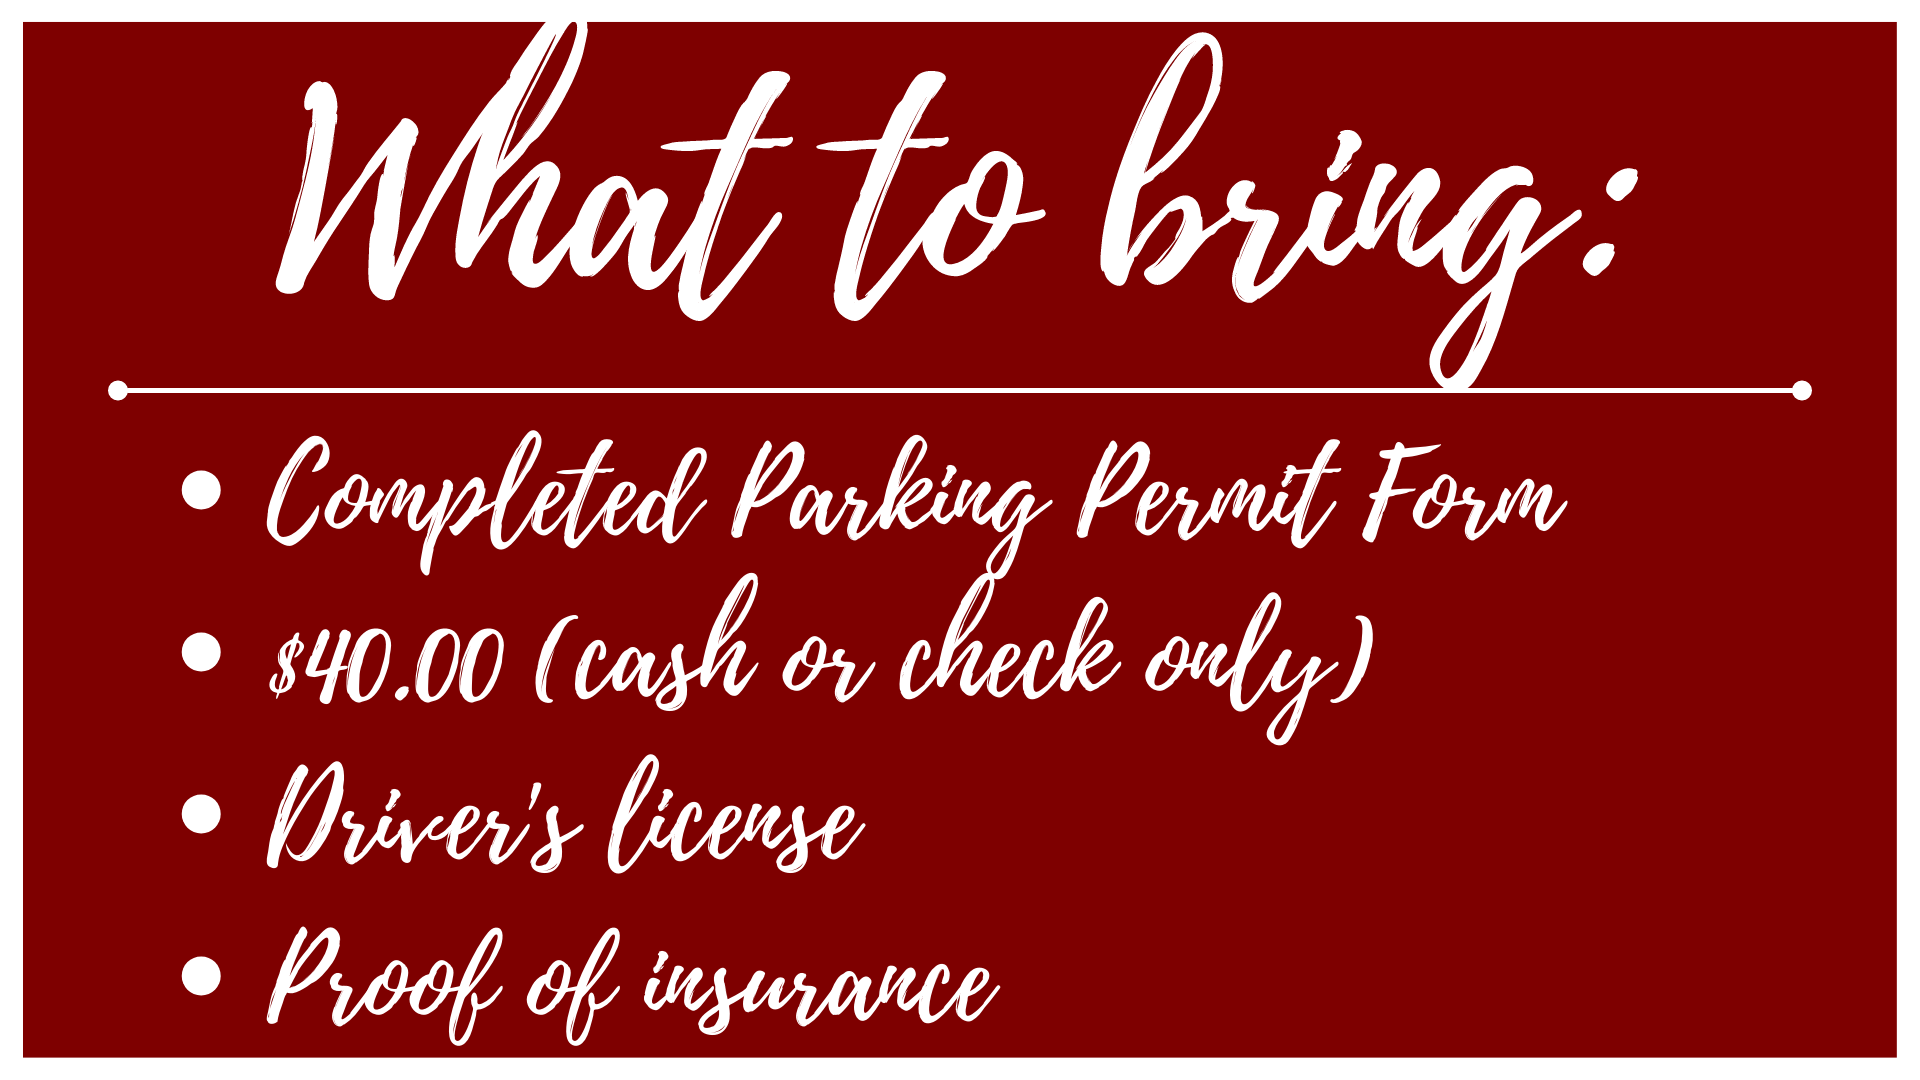 Parking Permit Requirements